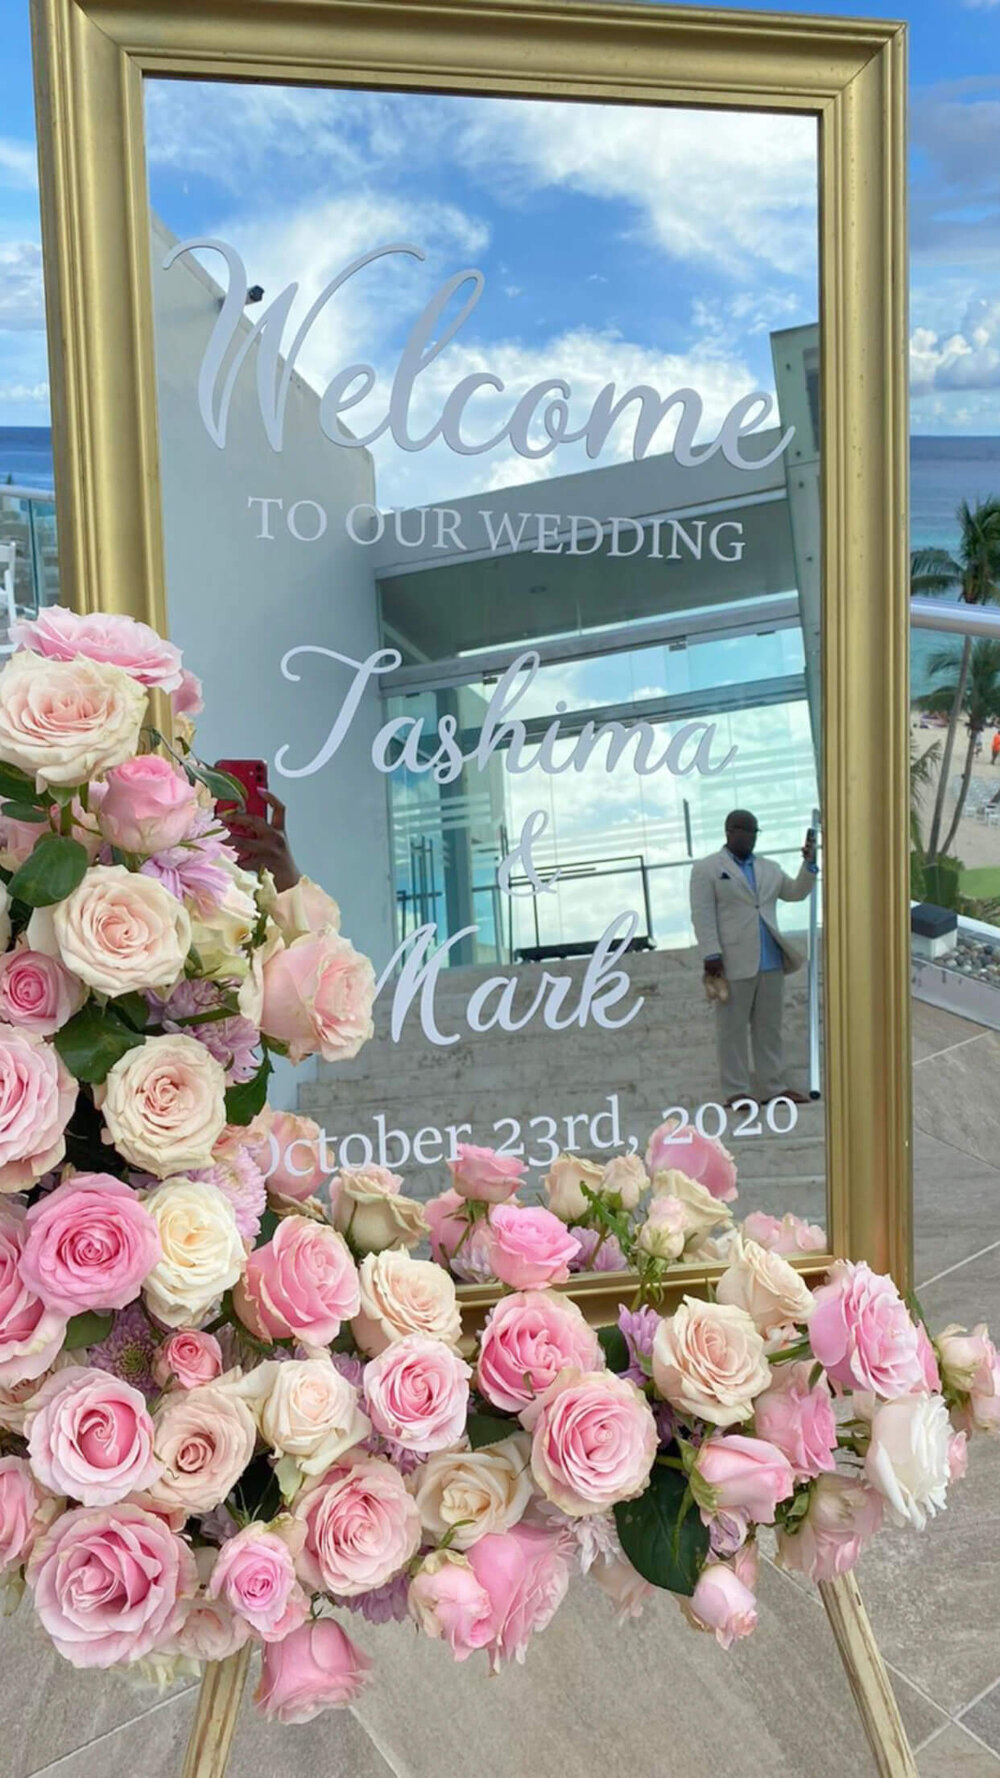 tashima-how-to-plan-a-destination-wedding-in-playa-del-carmen-mexico-azul-fives-beach-resort-black-destination-bride-desti-tv-desti-guide-to-destination-weddings-2020-mirror-welcome-sign.JPG